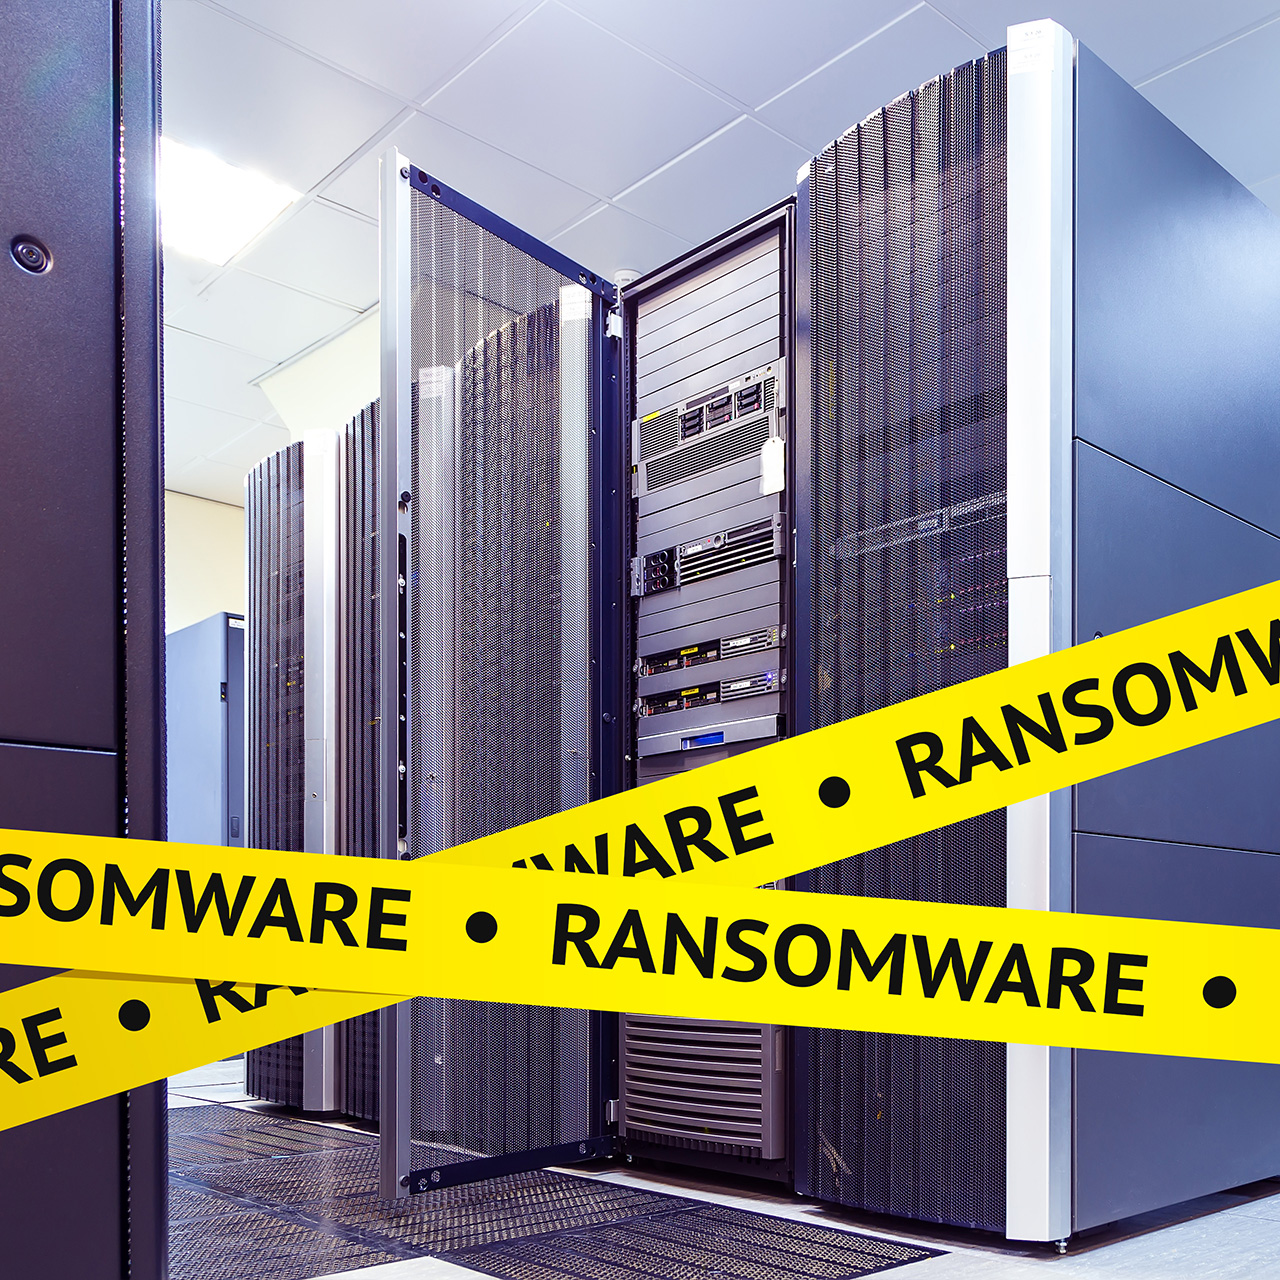 CTB-Locker ransomware infects 70 web servers